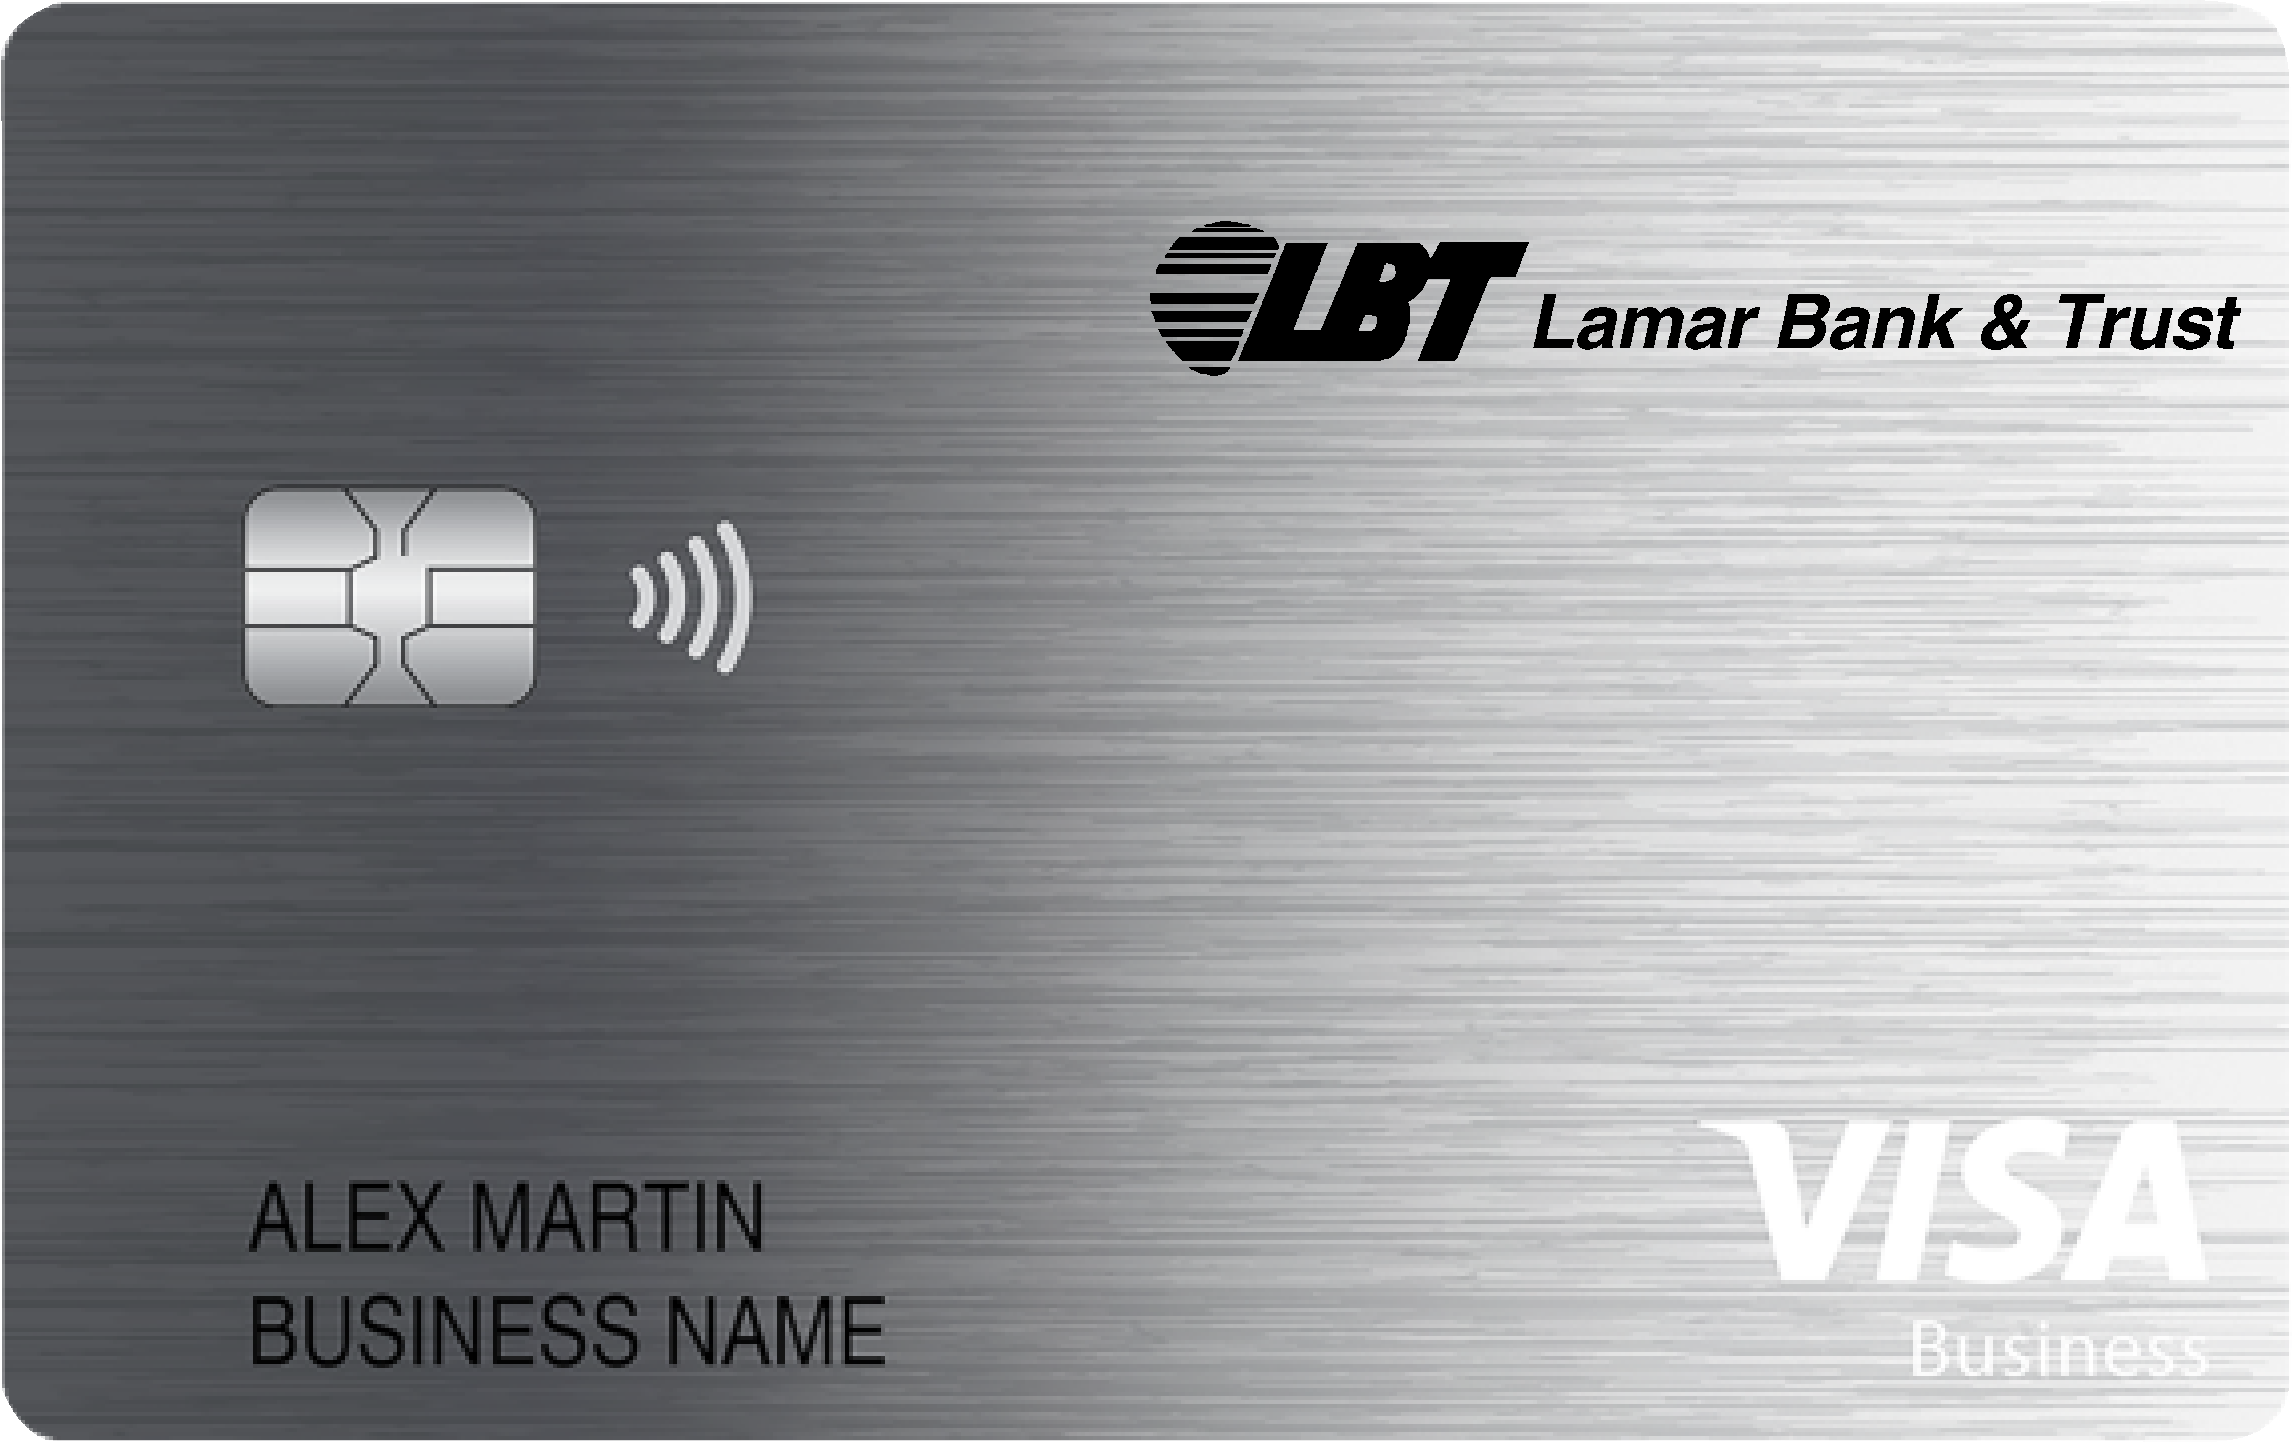 Lamar Bank